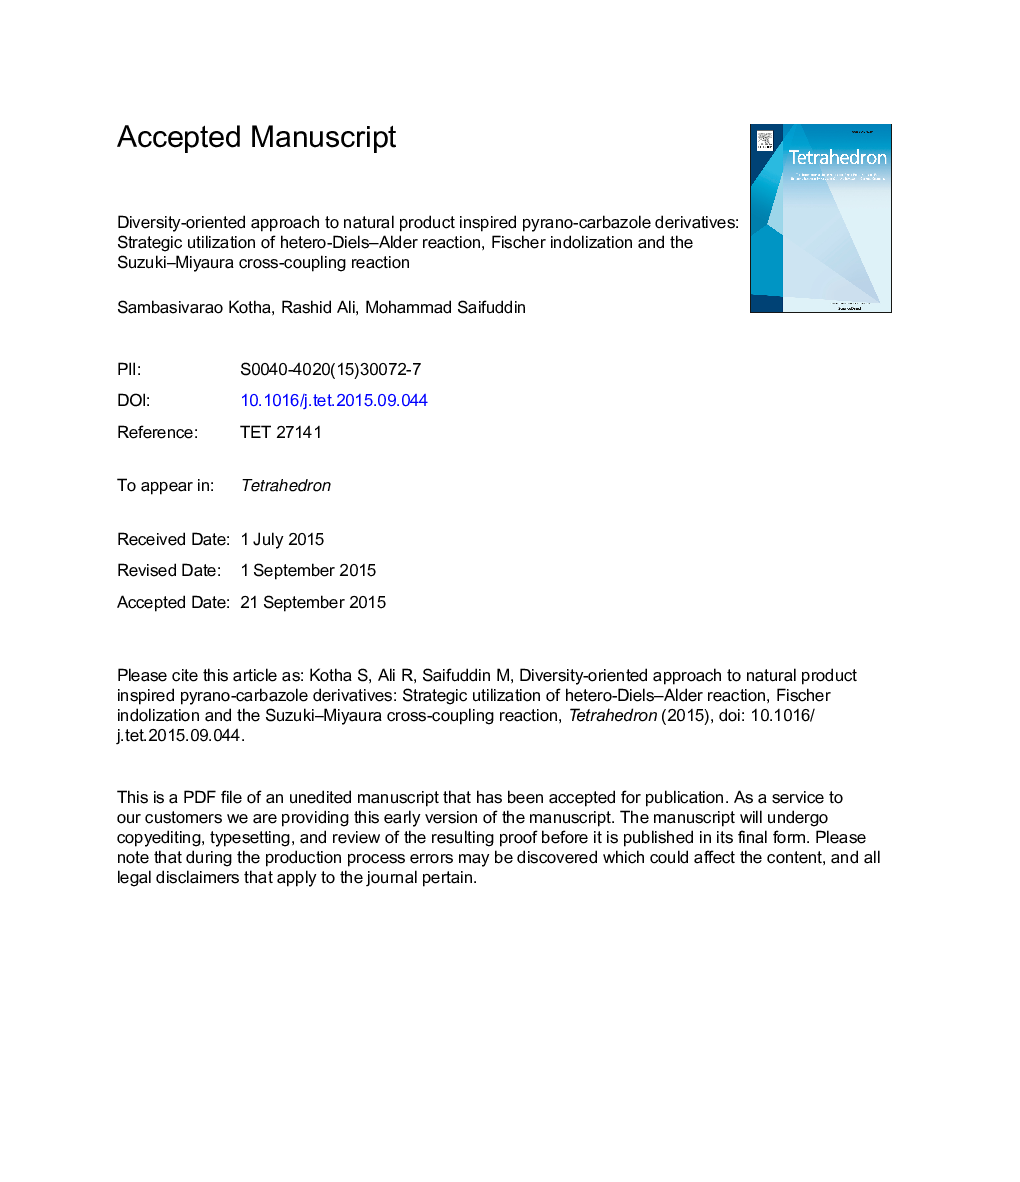 Diversity-oriented approach to natural product inspired pyrano-carbazole derivatives: strategic utilization of hetero-Diels-Alder reaction, Fischer indolization and the Suzuki-Miyaura cross-coupling reaction